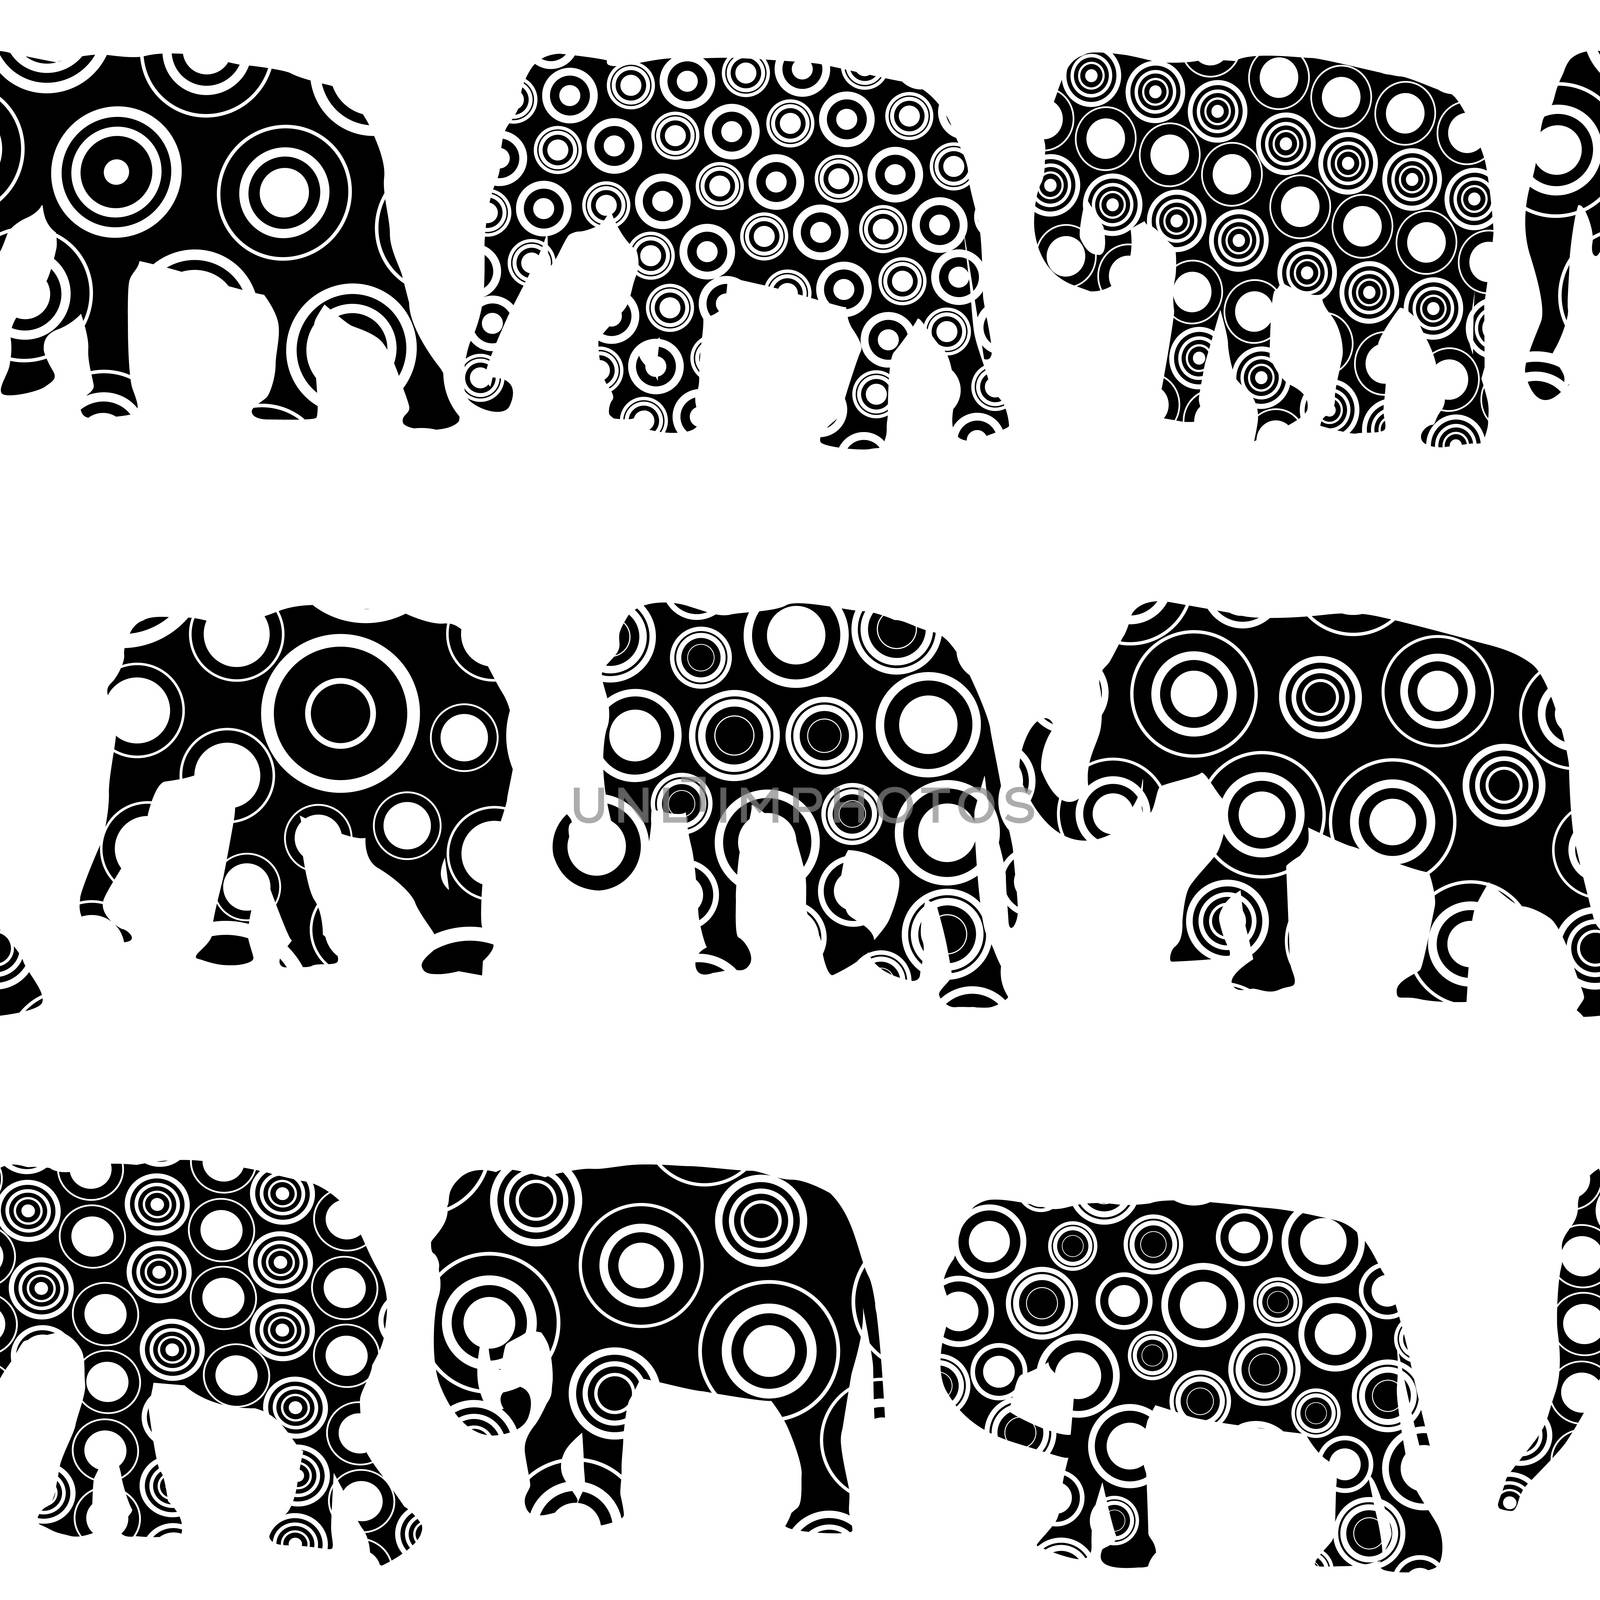 Black and white ornate patterned elephants